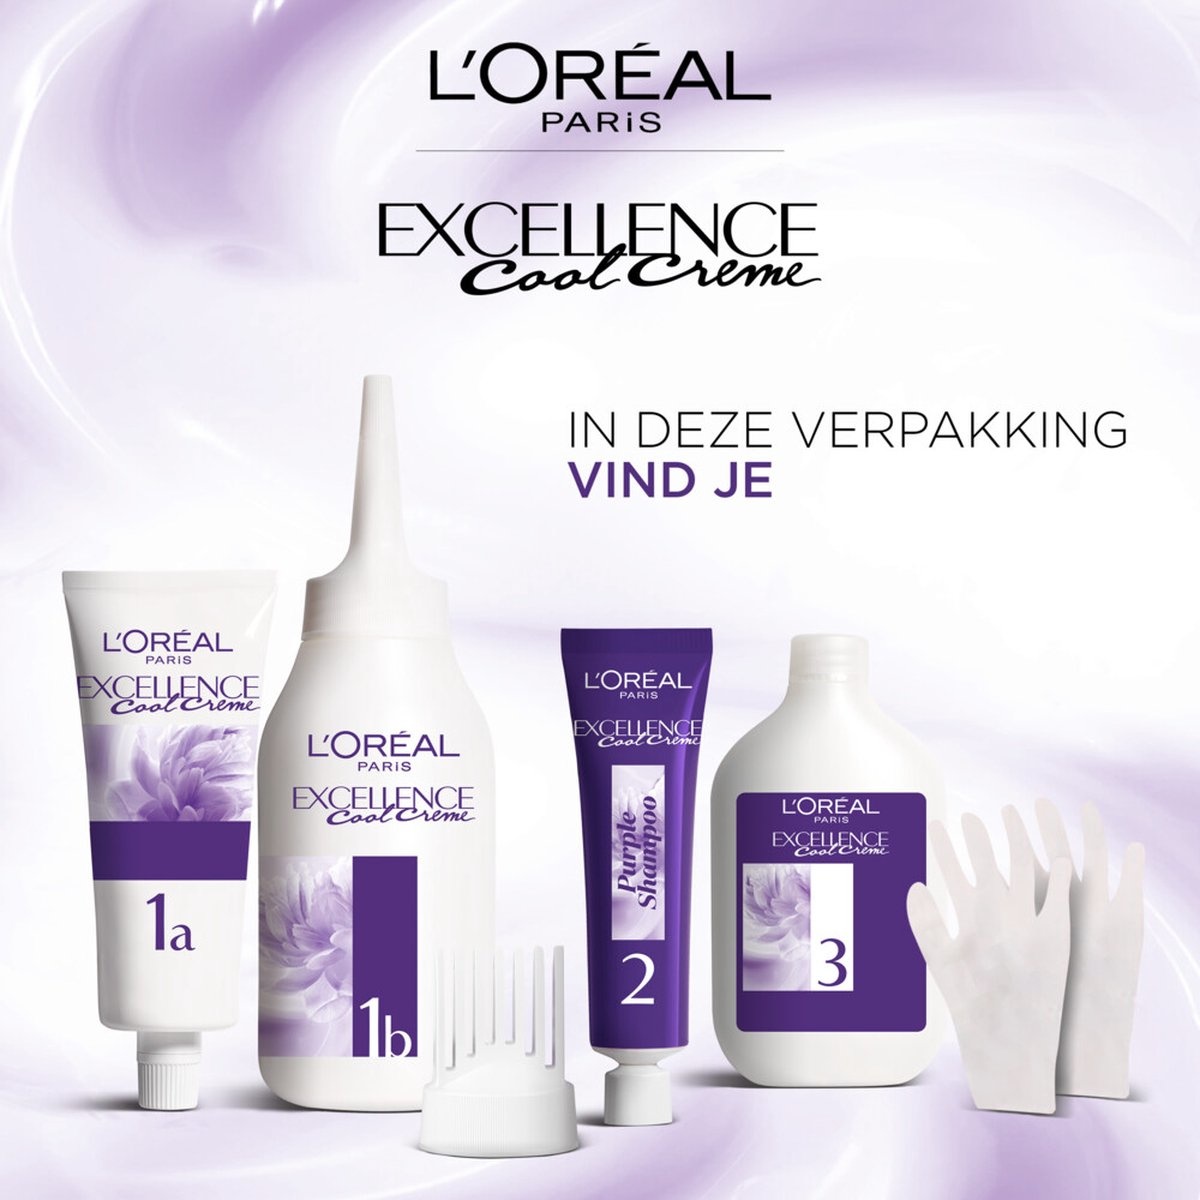 L'Oréal Paris Excellence Cool Creams 4.11 – Ultra Ash Brown – Permanente Haarfarbe – Verpackung beschädigt